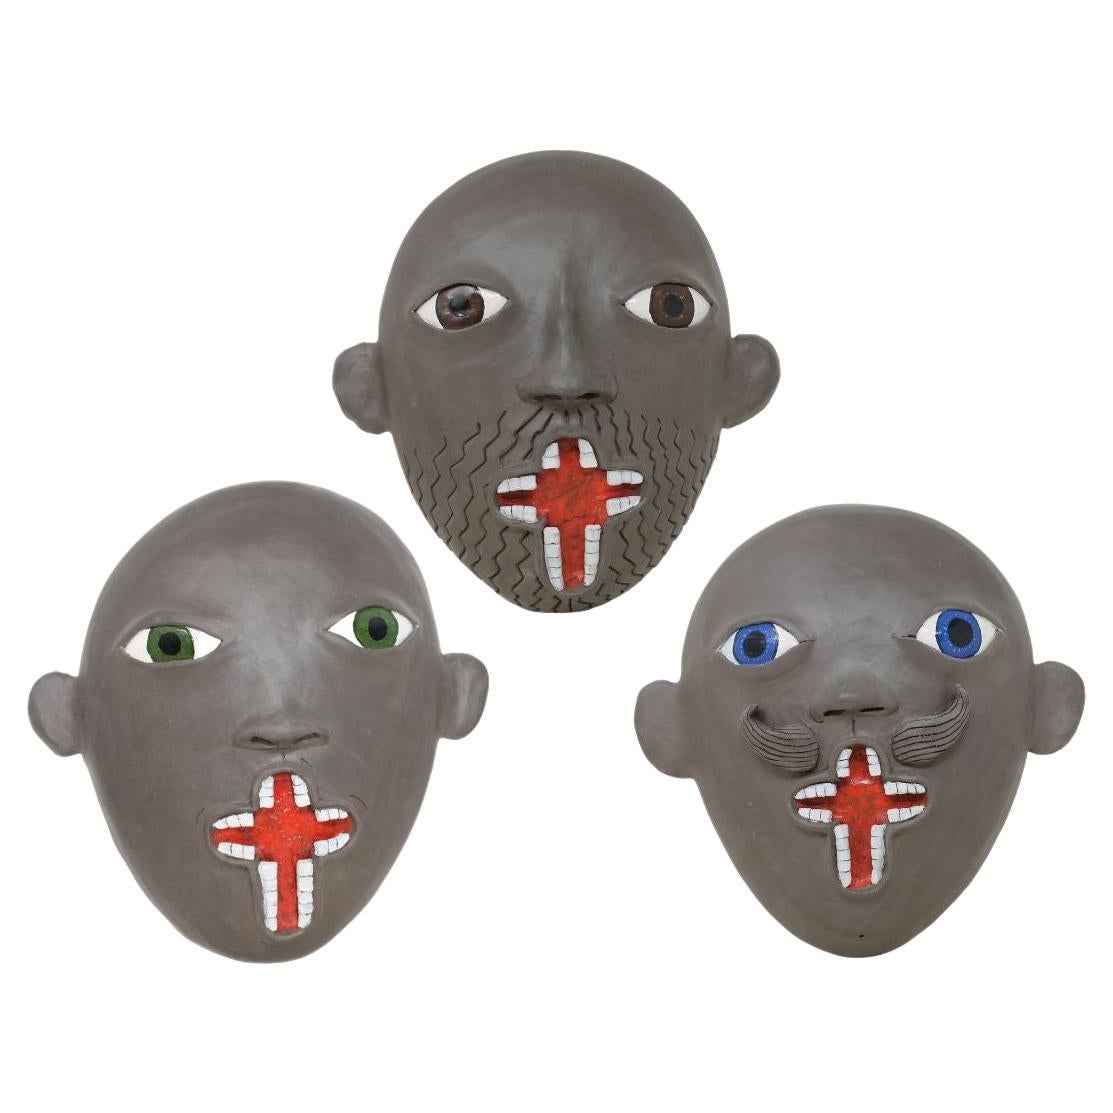 Masques Freaklab Trio fabriqus entirement  la main en cramique